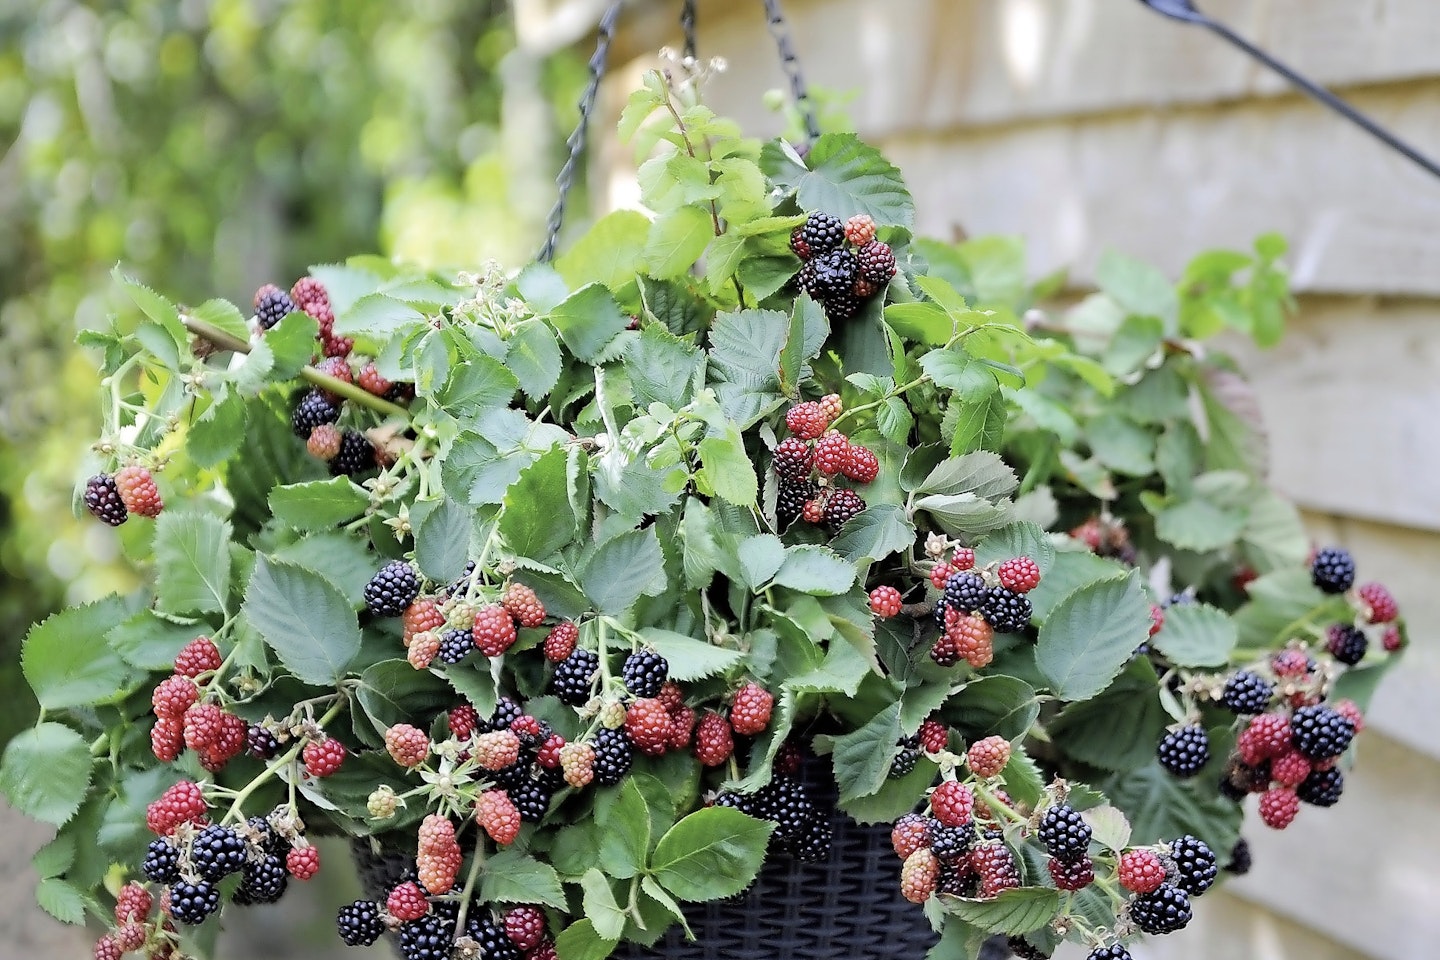 Blackberry 'Black Cascade' growing in a hanging basket